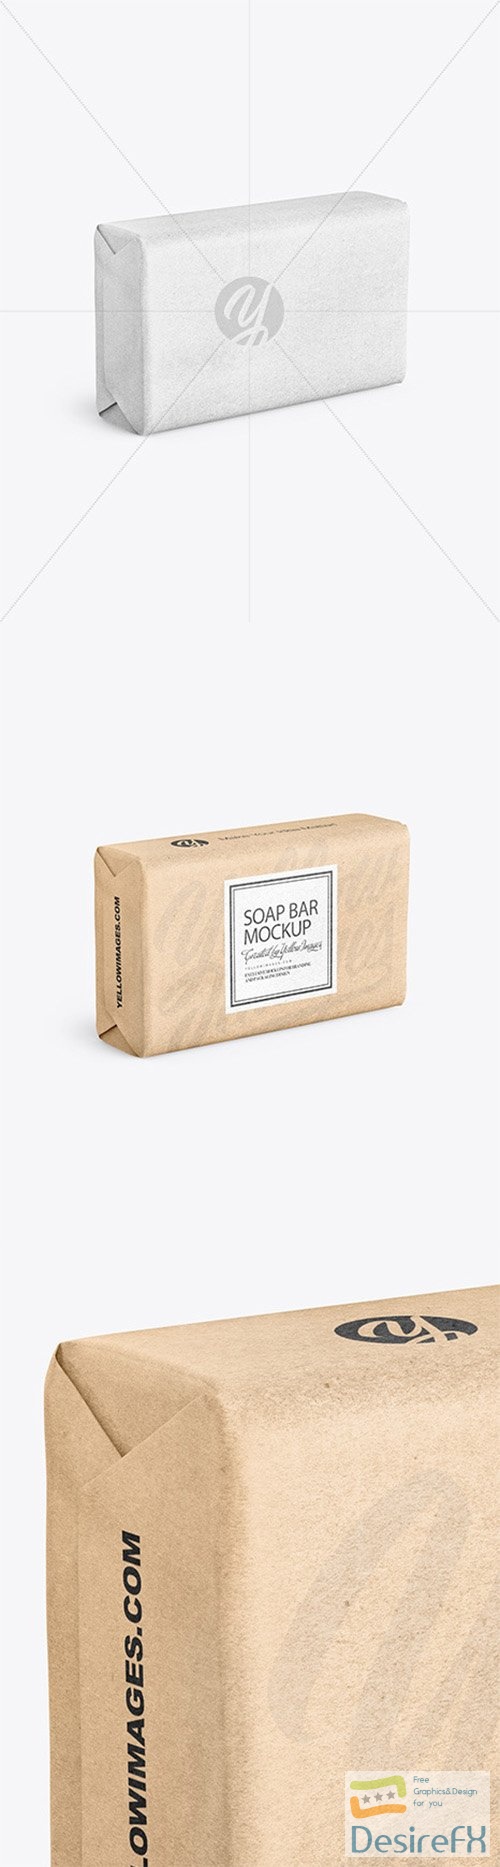 Kraft Paper Soap Bar Package Mockup 80773 TIF